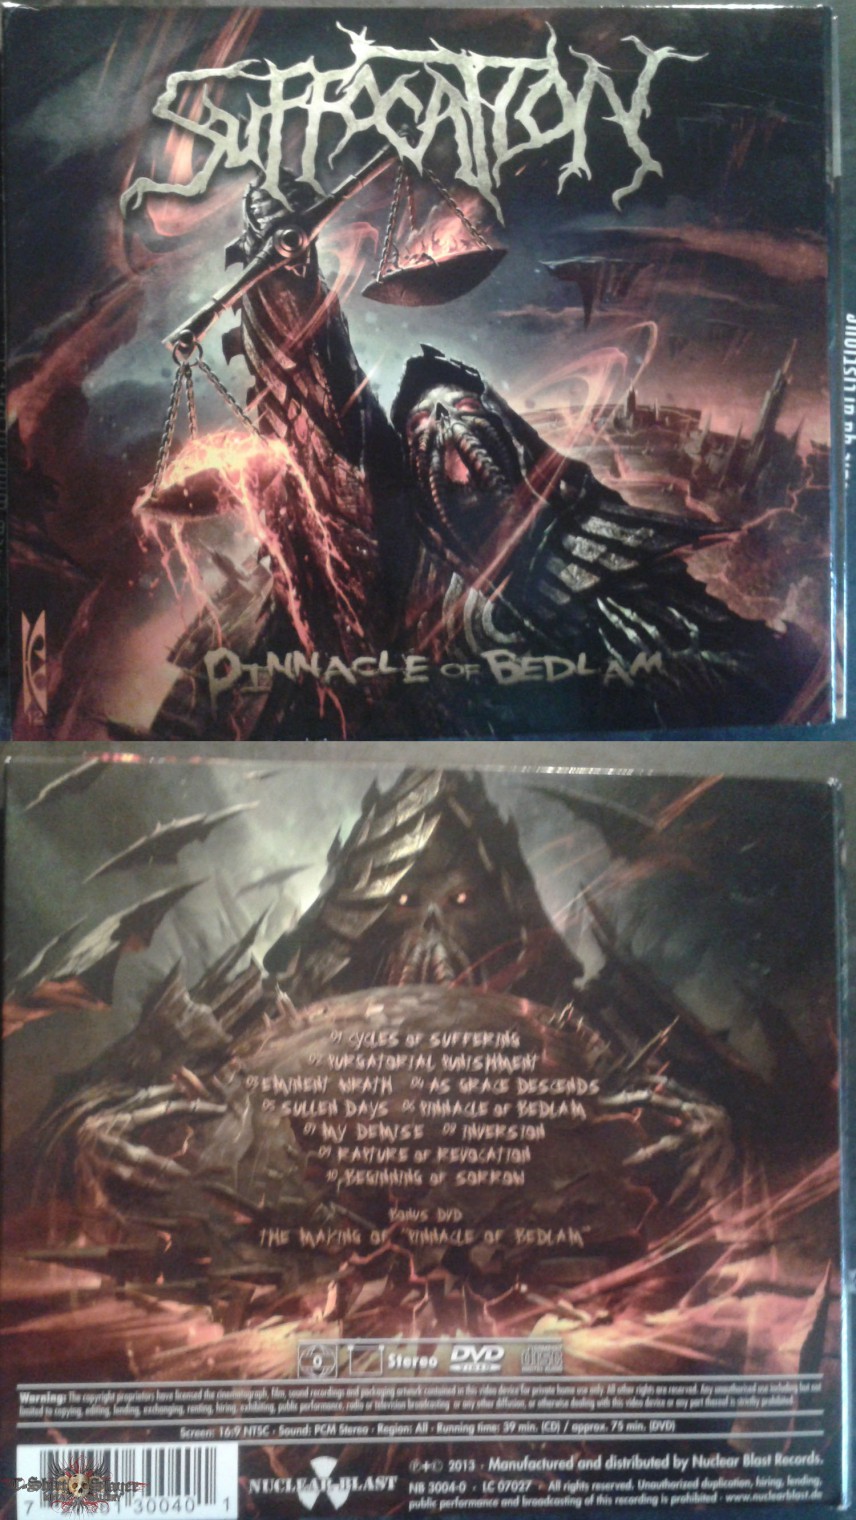 Suffocation - Pinnacle of Bedlam Ltd Digipack CD + DVD (2013) |  TShirtSlayer TShirt and BattleJacket Gallery